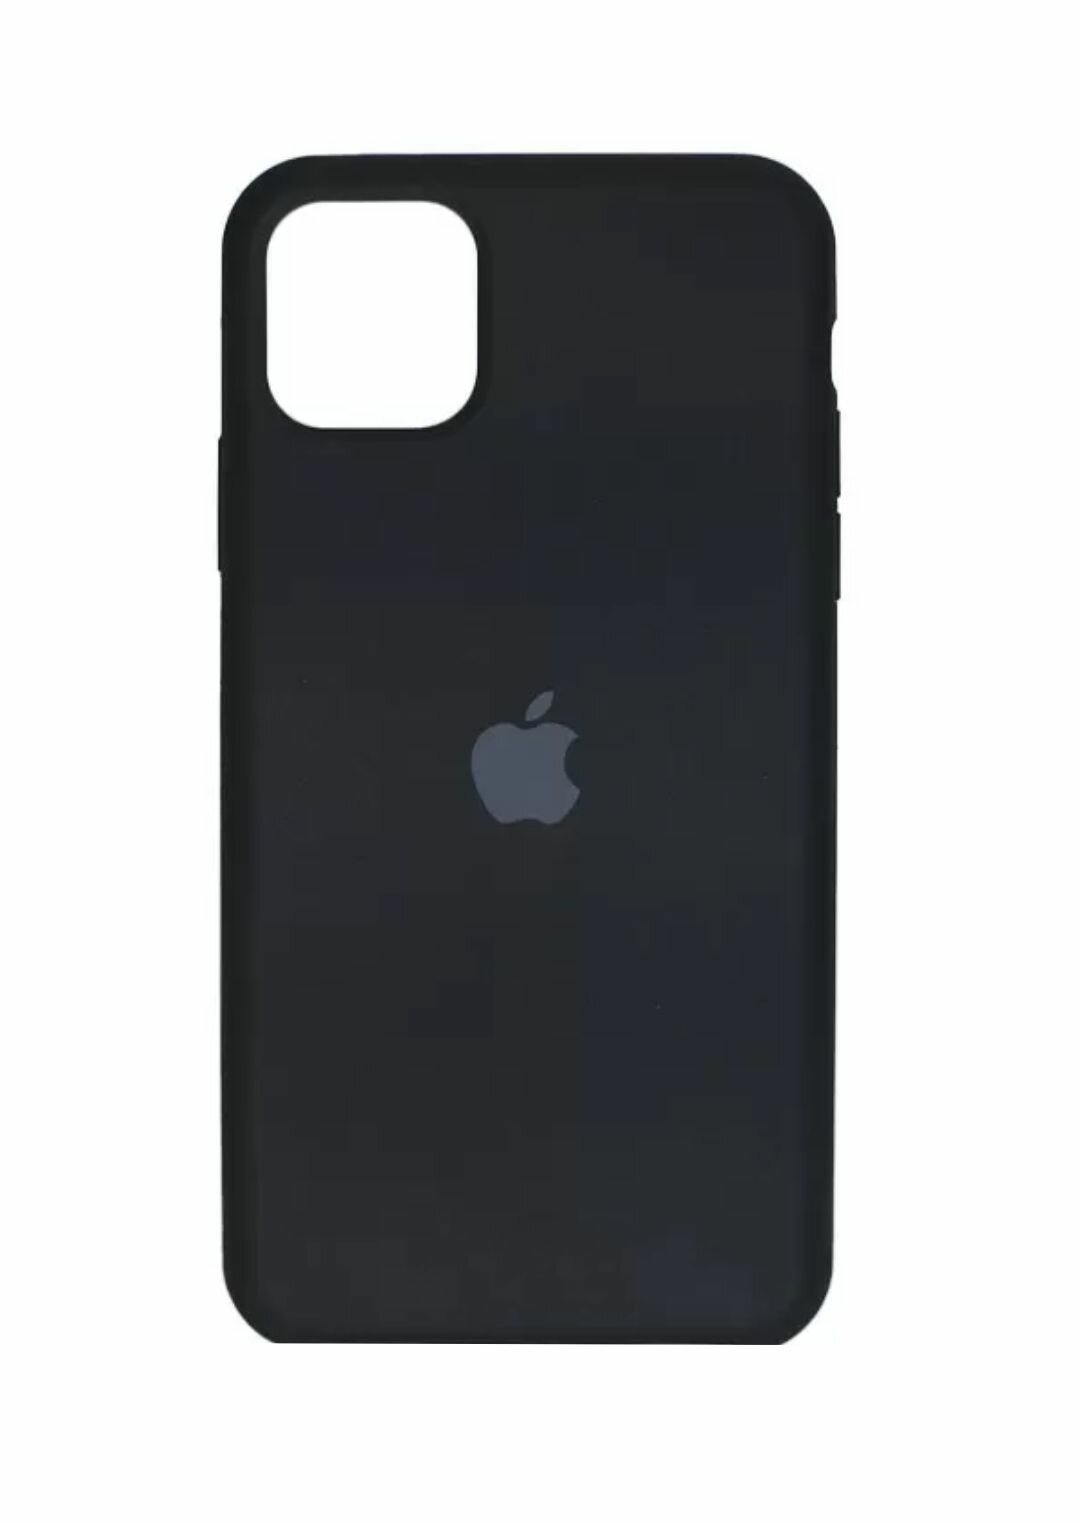 IPhone 11 pro, чёрный чехол, айфон 11 про, Silicone case под оригинал